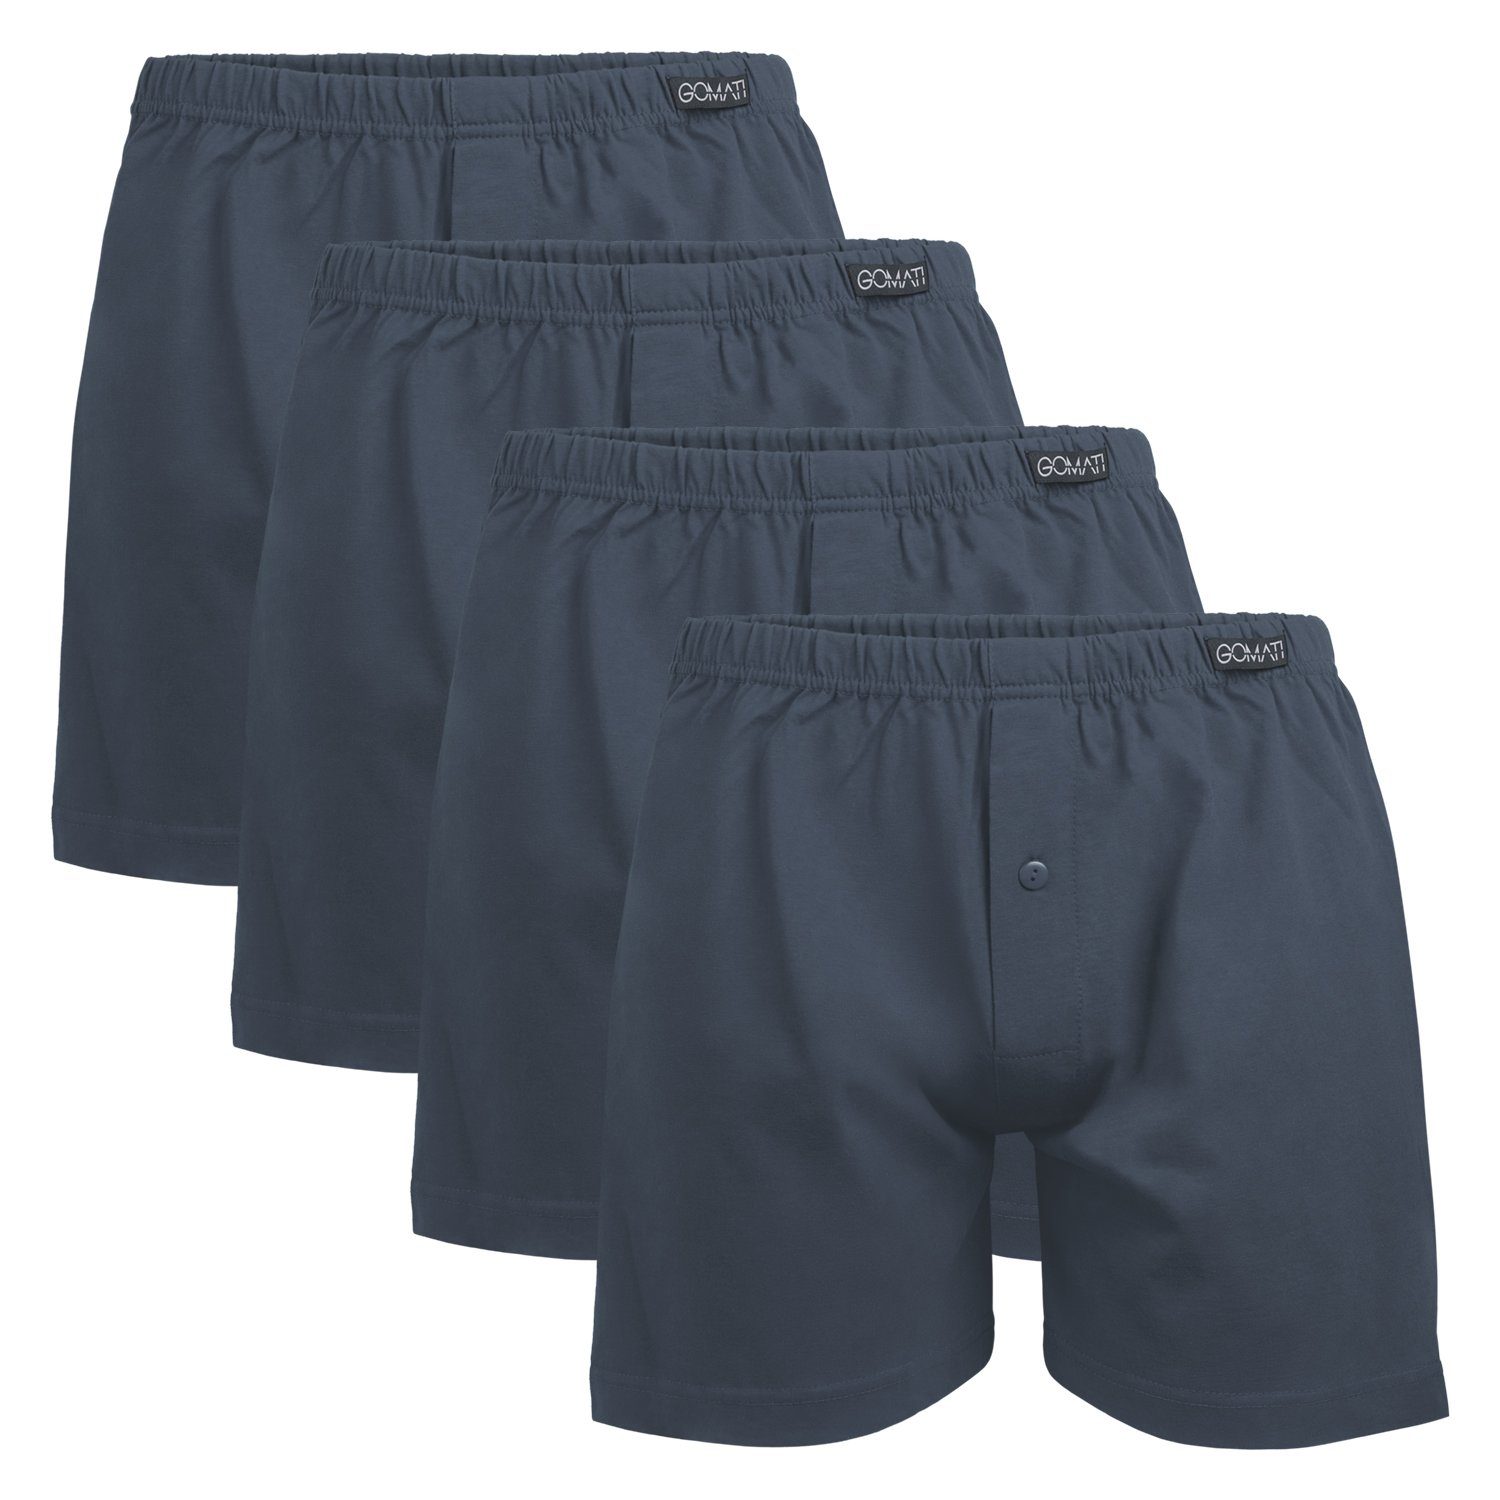 Gomati Boxershorts Herren Jersey Boxershorts Stretch Shorts aus Baumwolle (4er Pack) Anthrazit